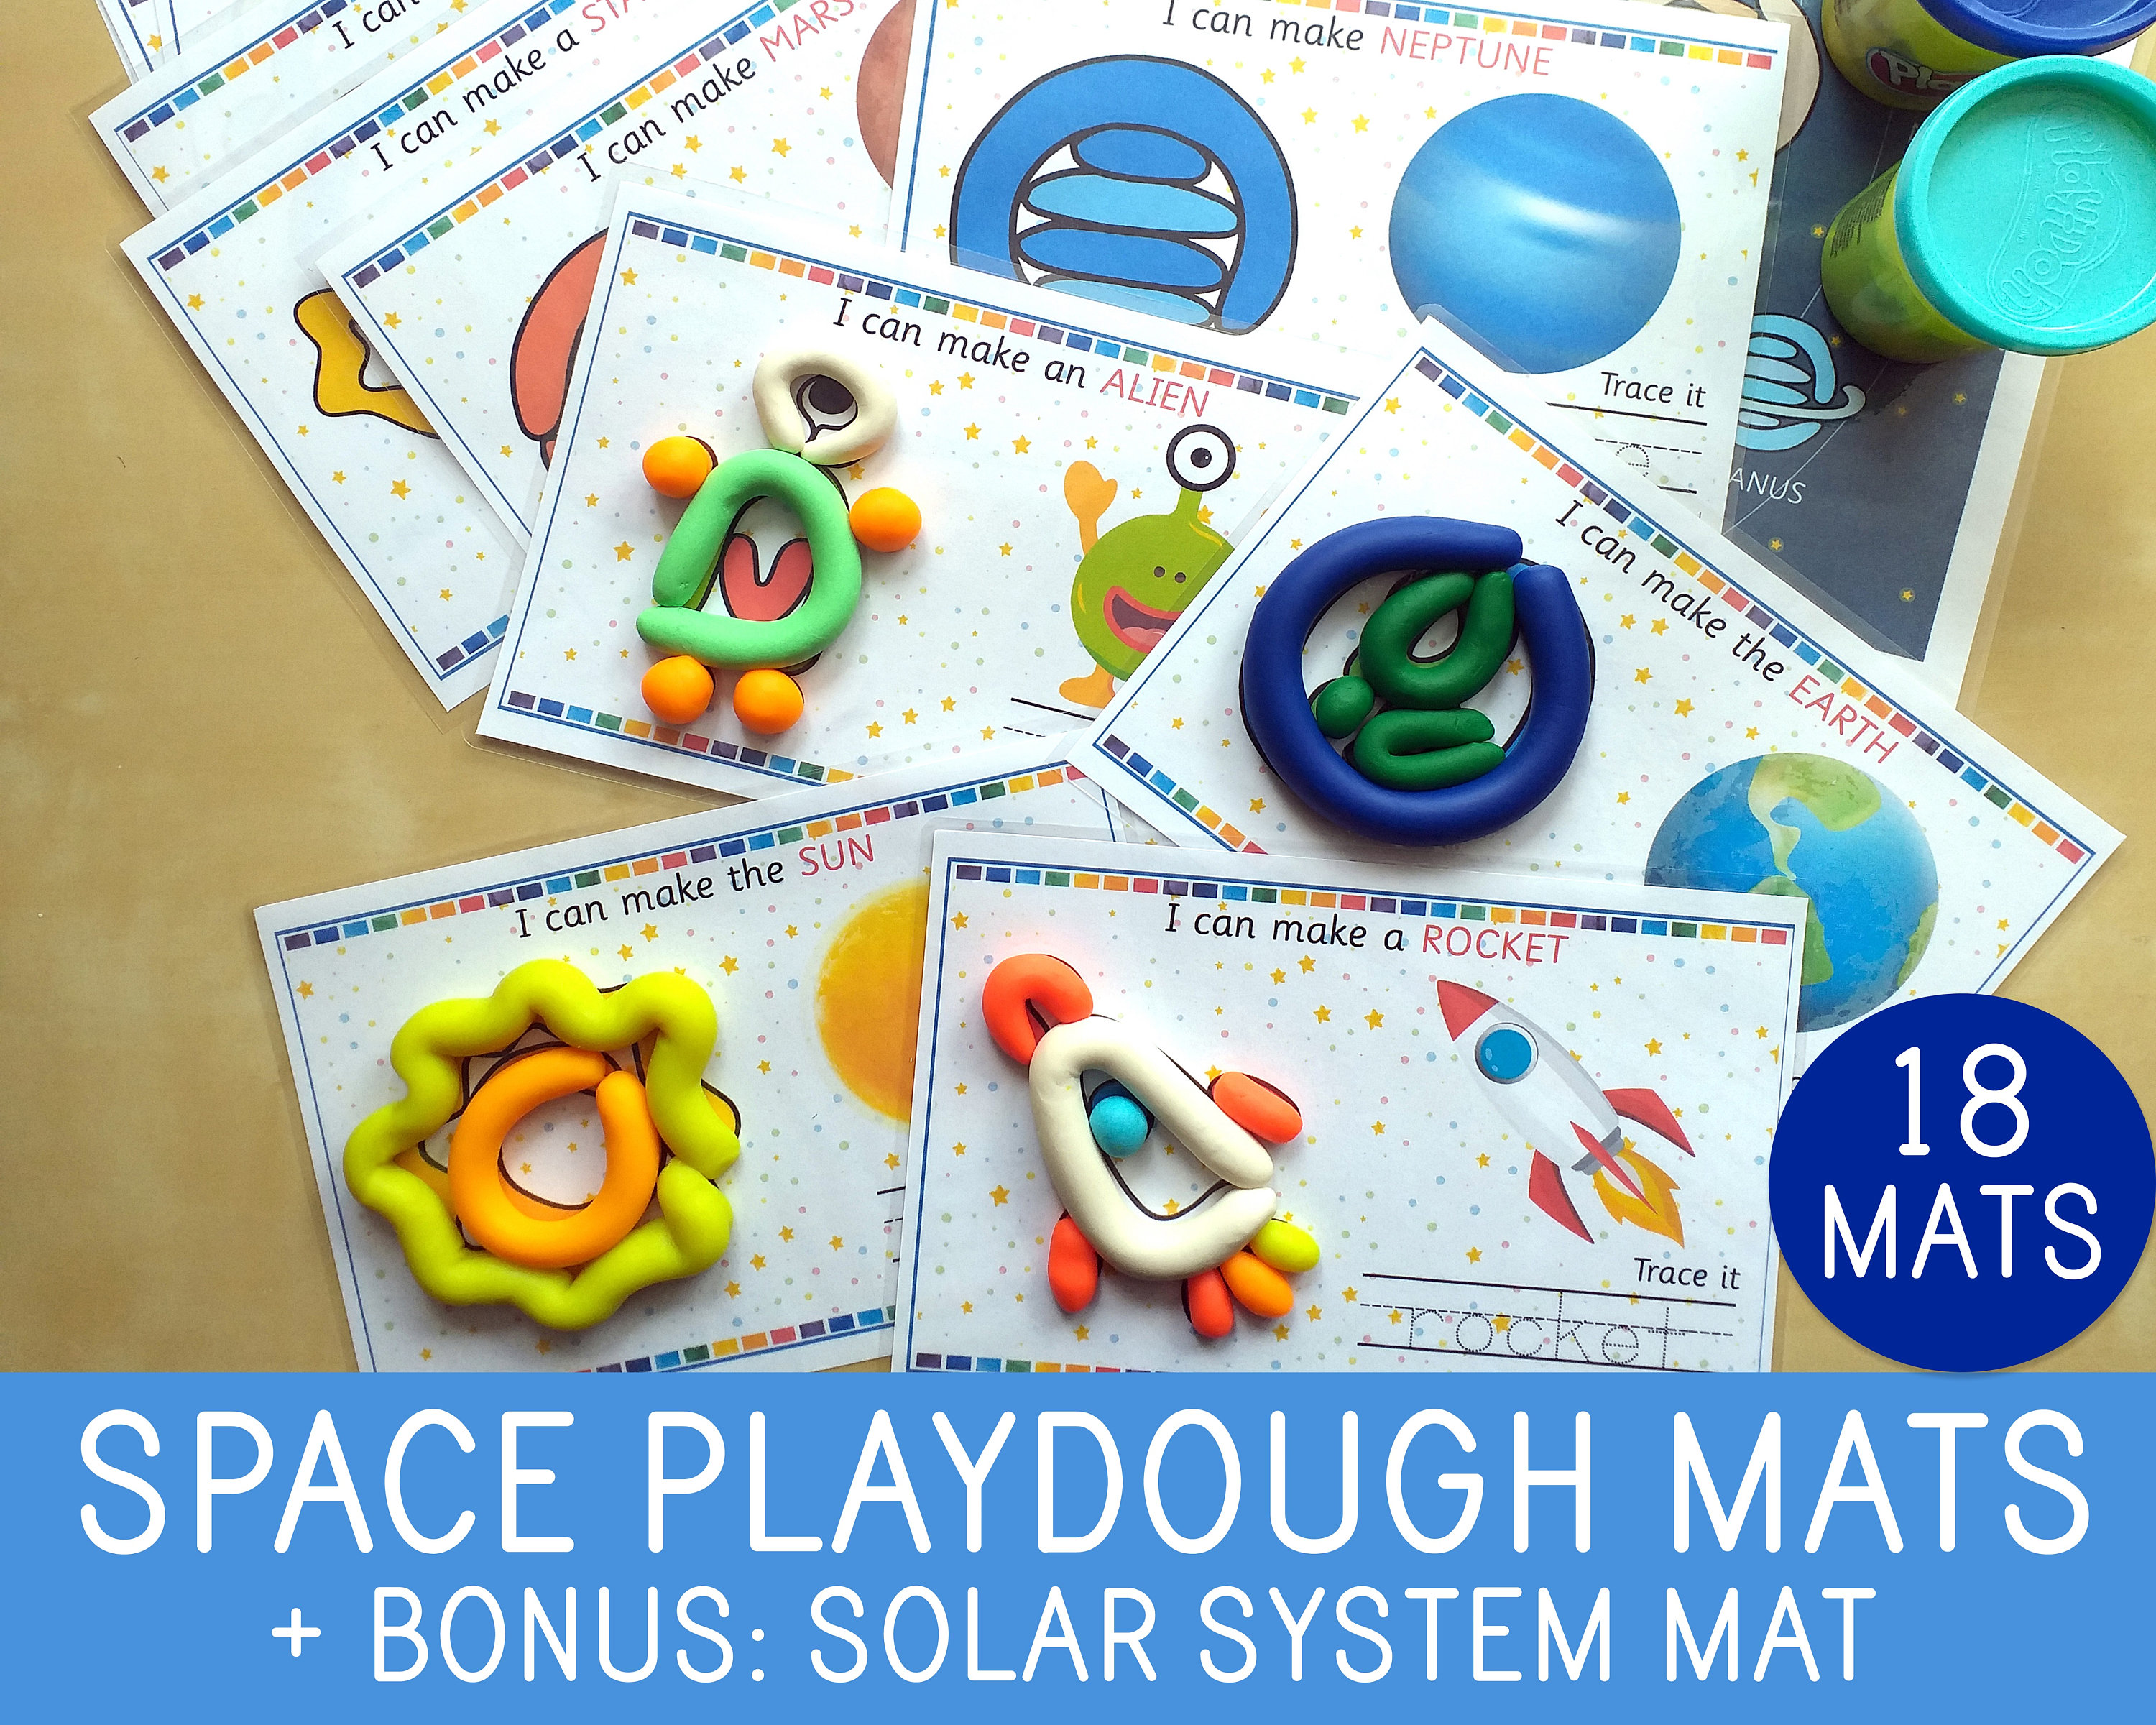 Space Playdough Mats Free Printable - Fun-A-Day!